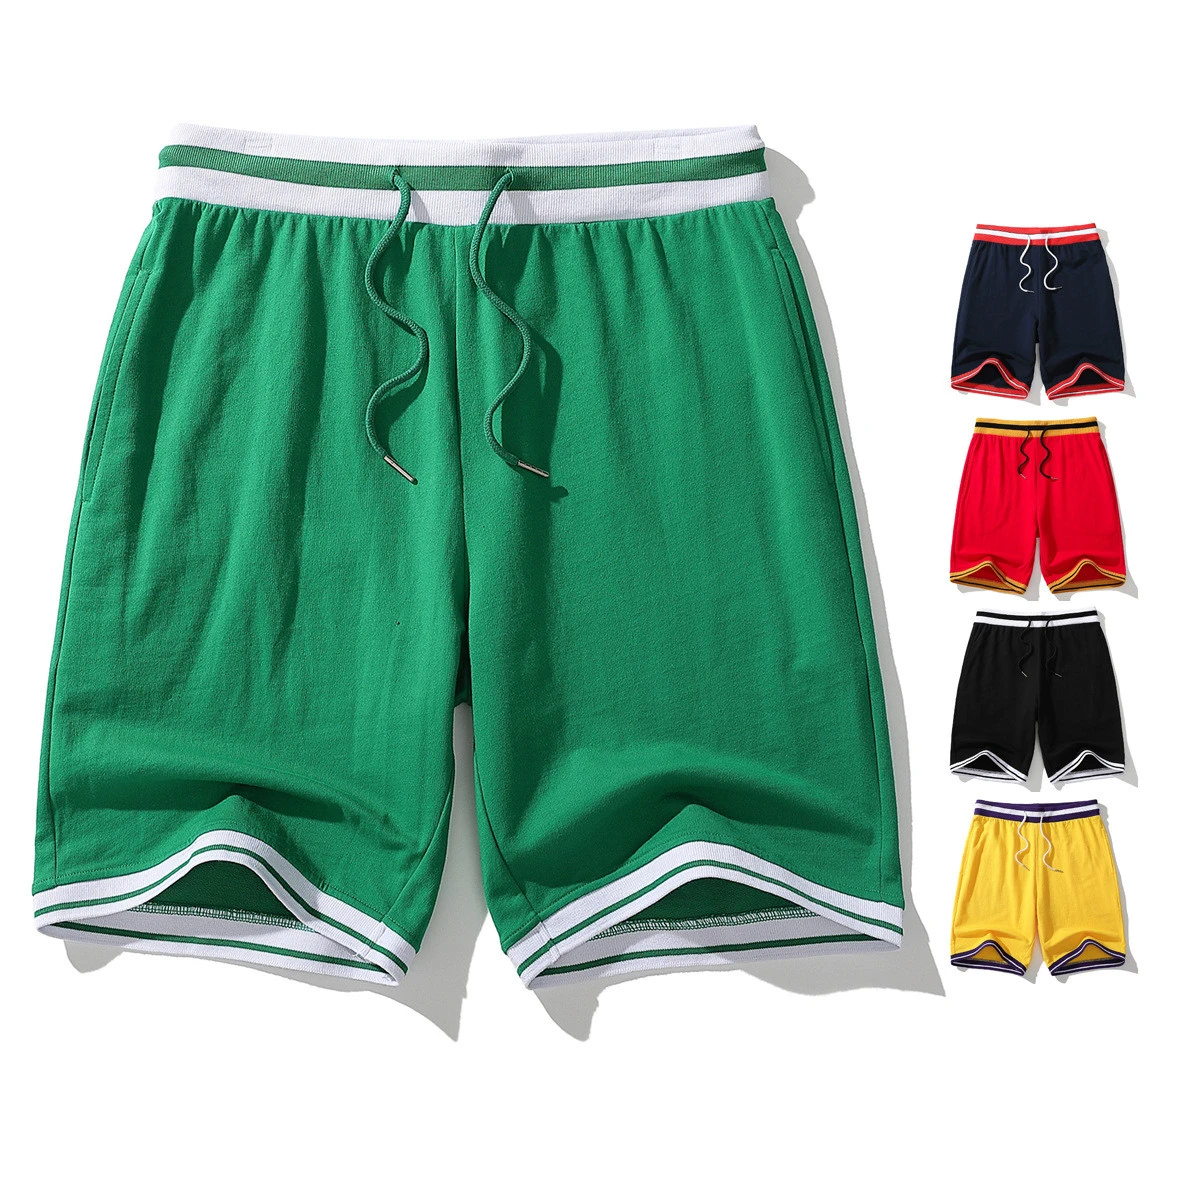 Summer Shorts Men's 250g Cotton Terry Cloth Five Pants Sport Fashion Plus Size Gym Short Clothing - Casual Shorts - AliExpress